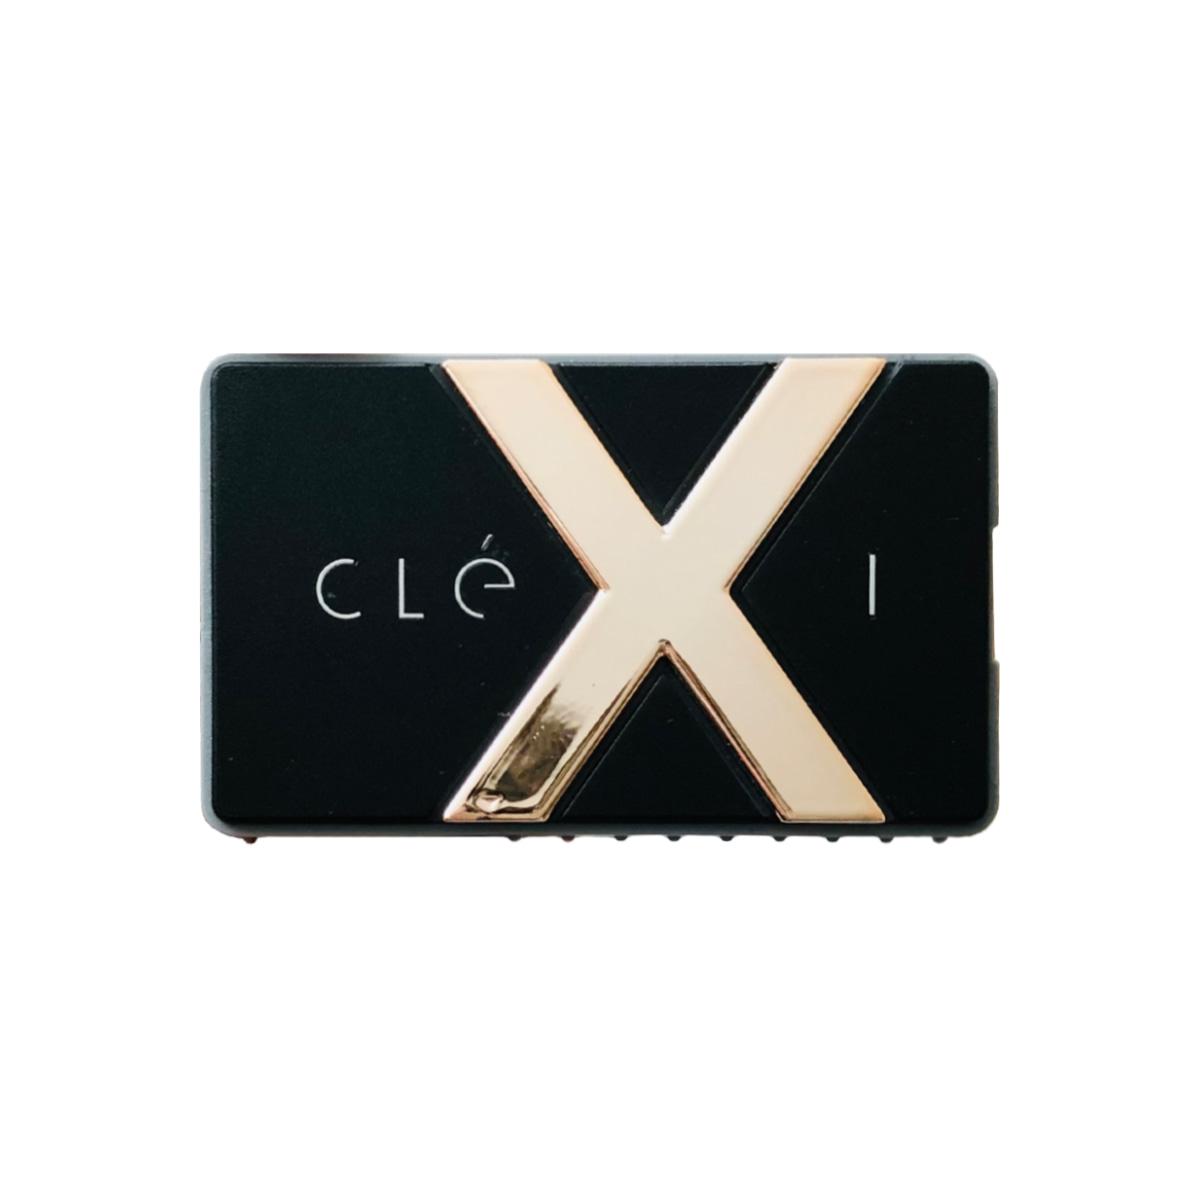 clexi-512GB-001